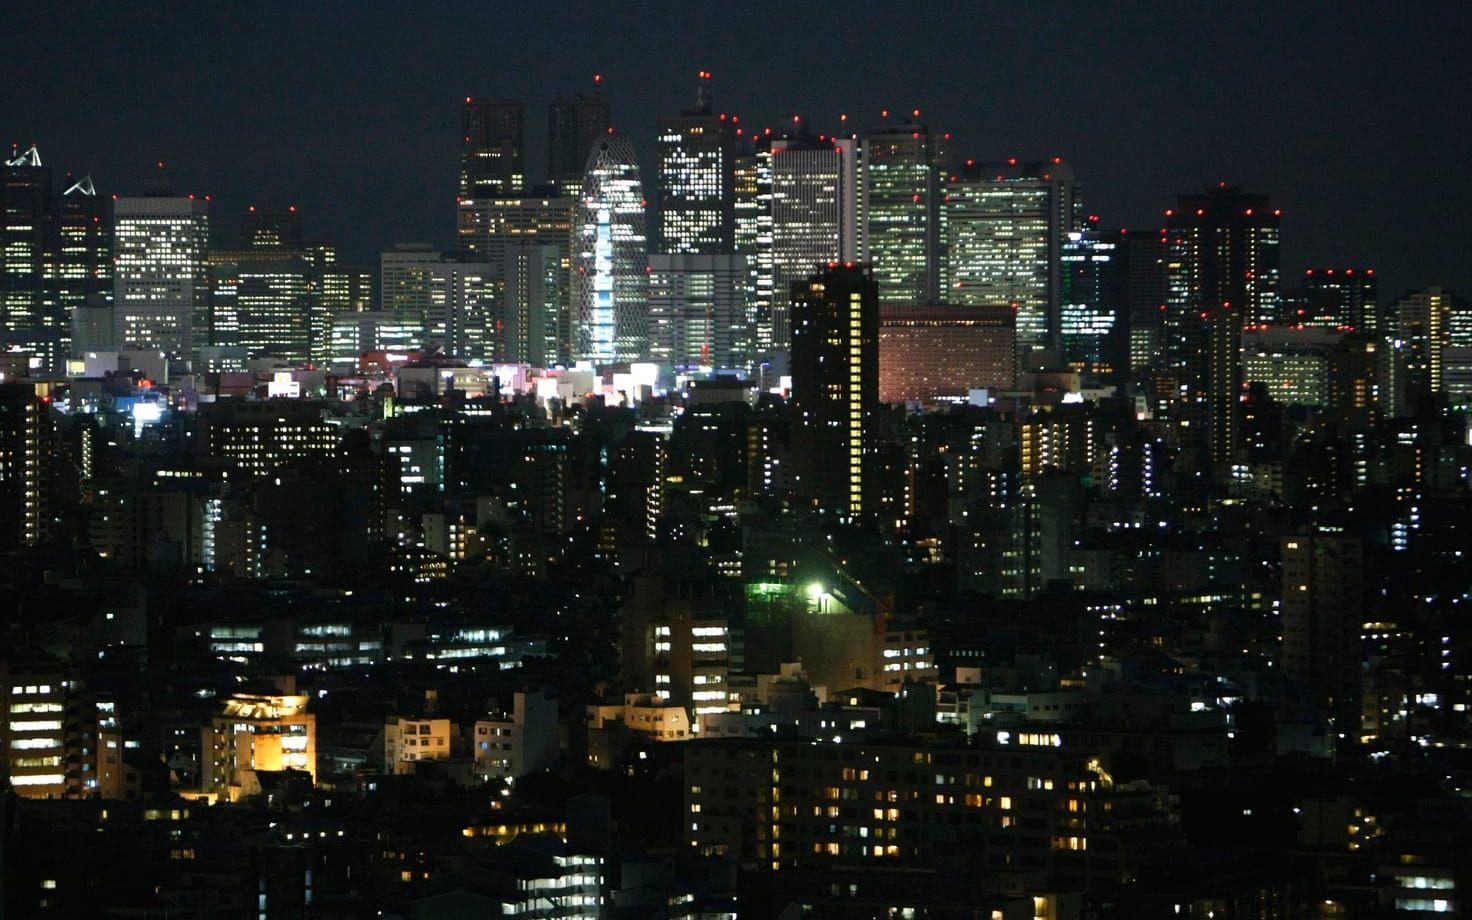 9. Tokyo